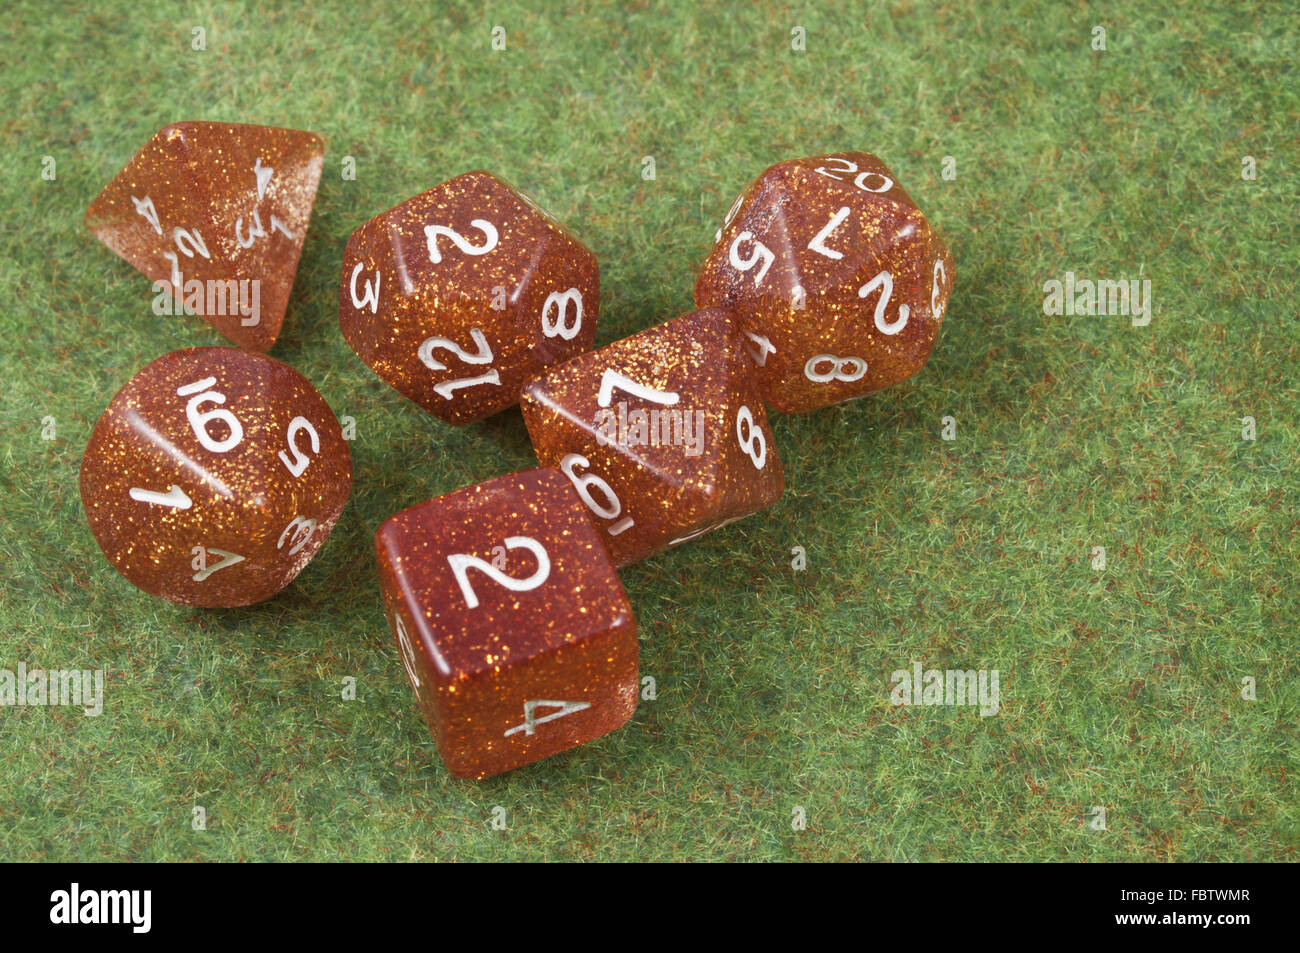 Full set of dice Stock Photo